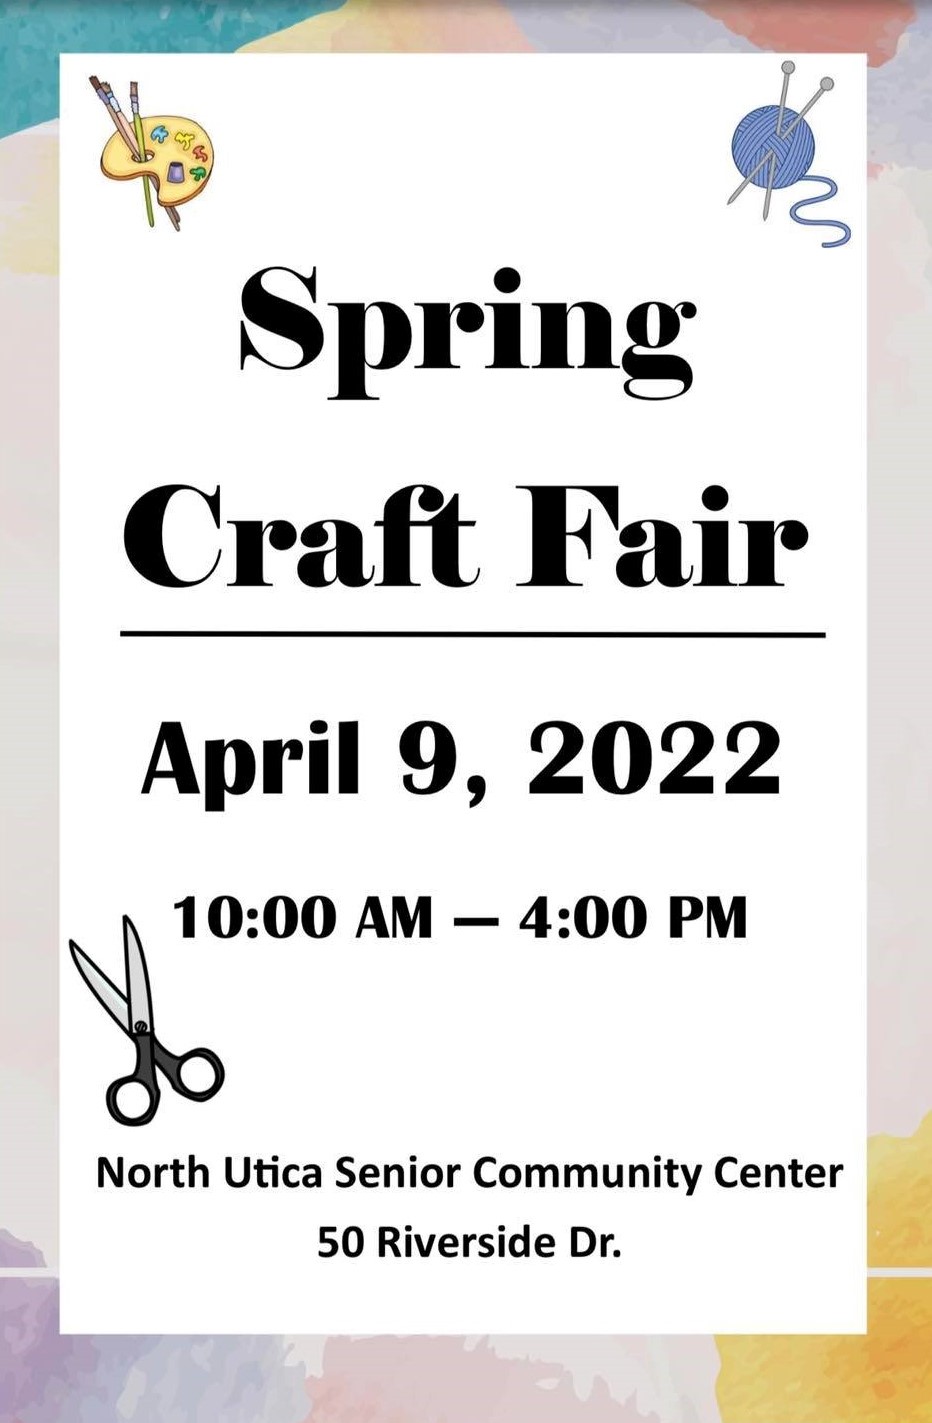 Spring Craft Fair planned at North Utica Community Center Saturday, April 9